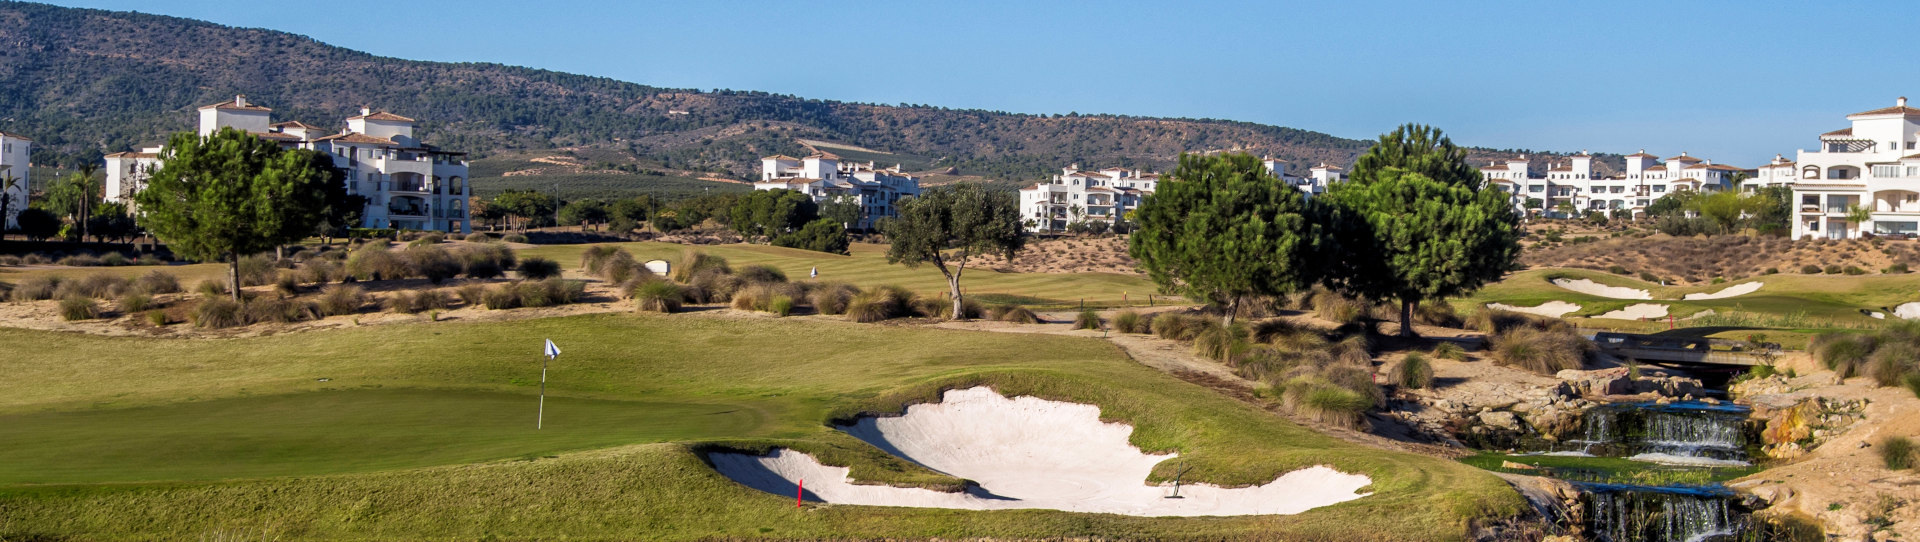 Spain golf courses - Hacienda Riquelme Golf Resort - Photo 3